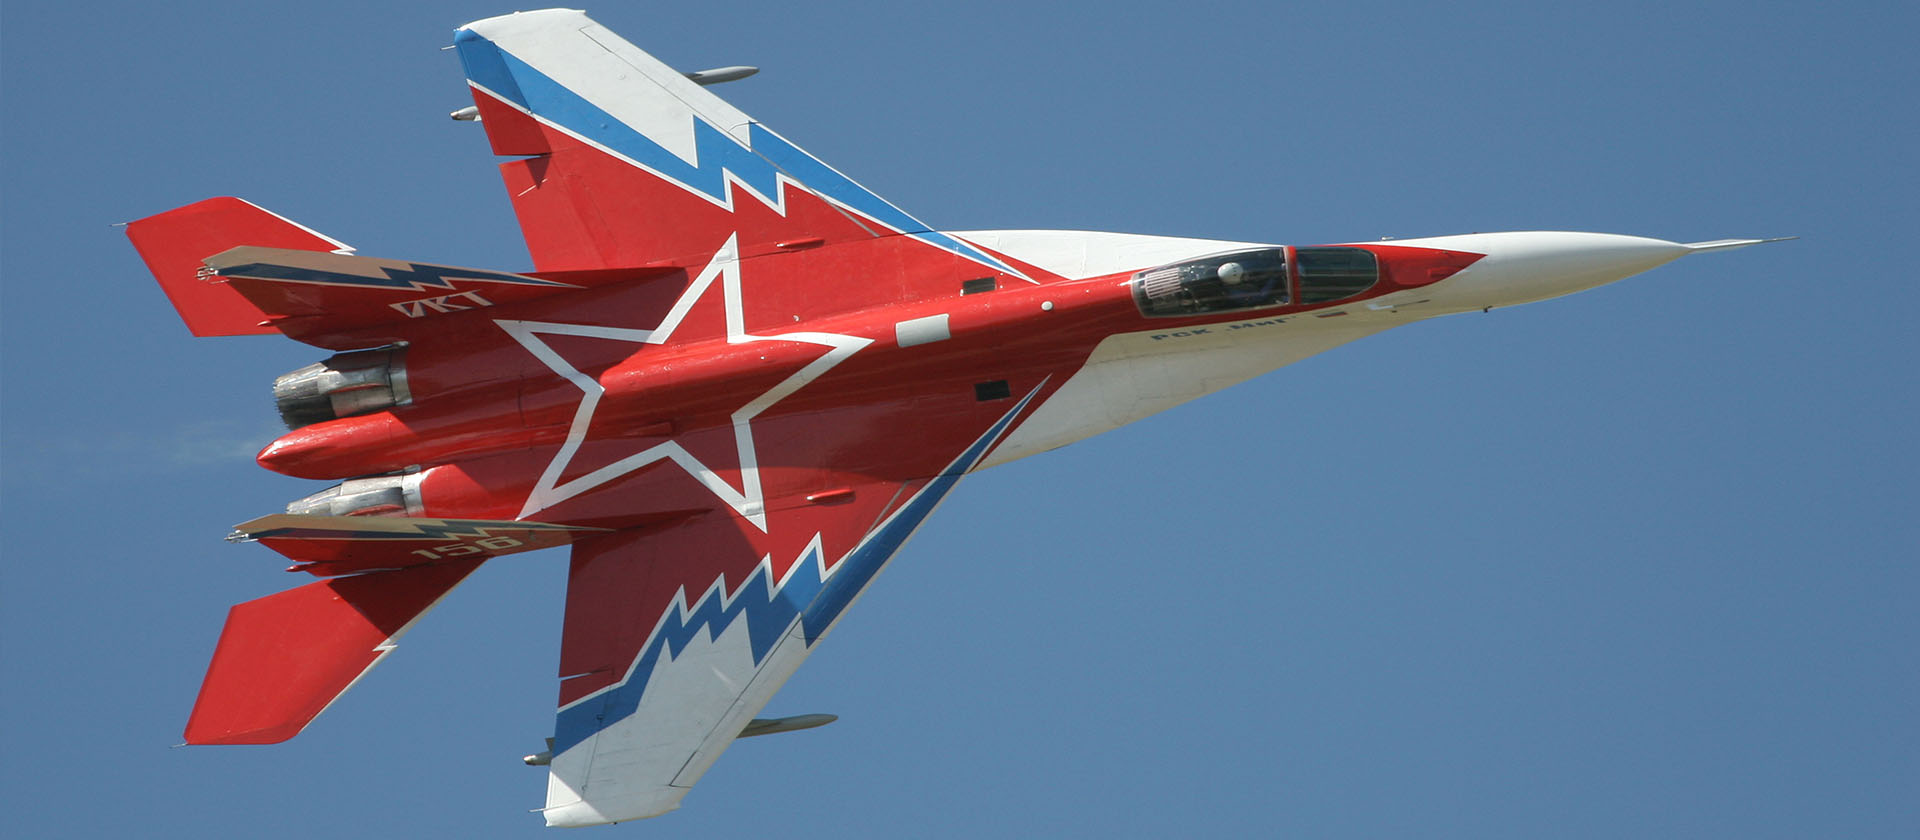 MiG-29 flights